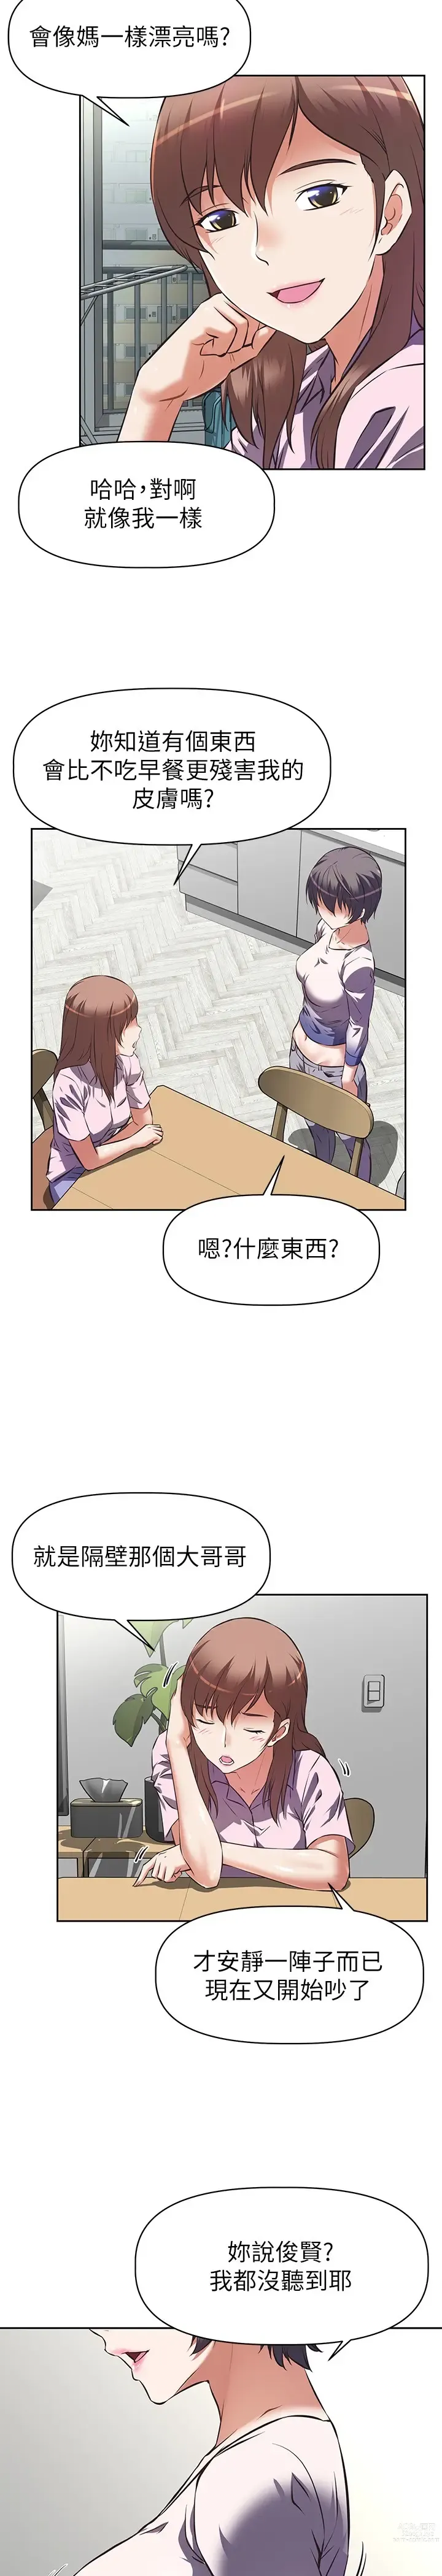 Page 10 of manga 阿姨不可以壞壞 1-30話